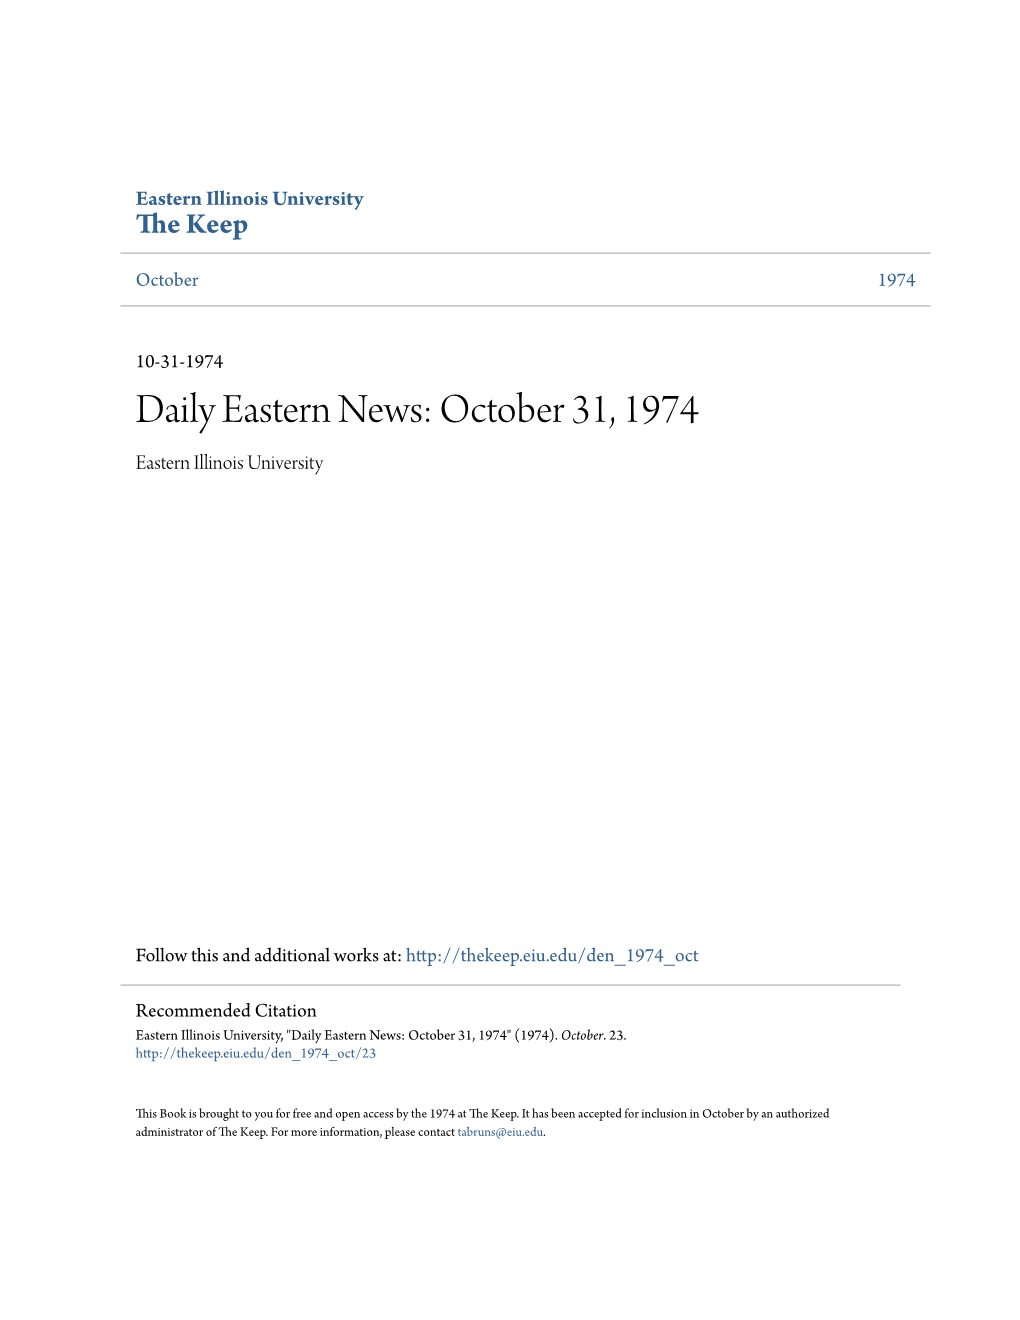 Daily Eastern News: October 31, 1974 Eastern Illinois University